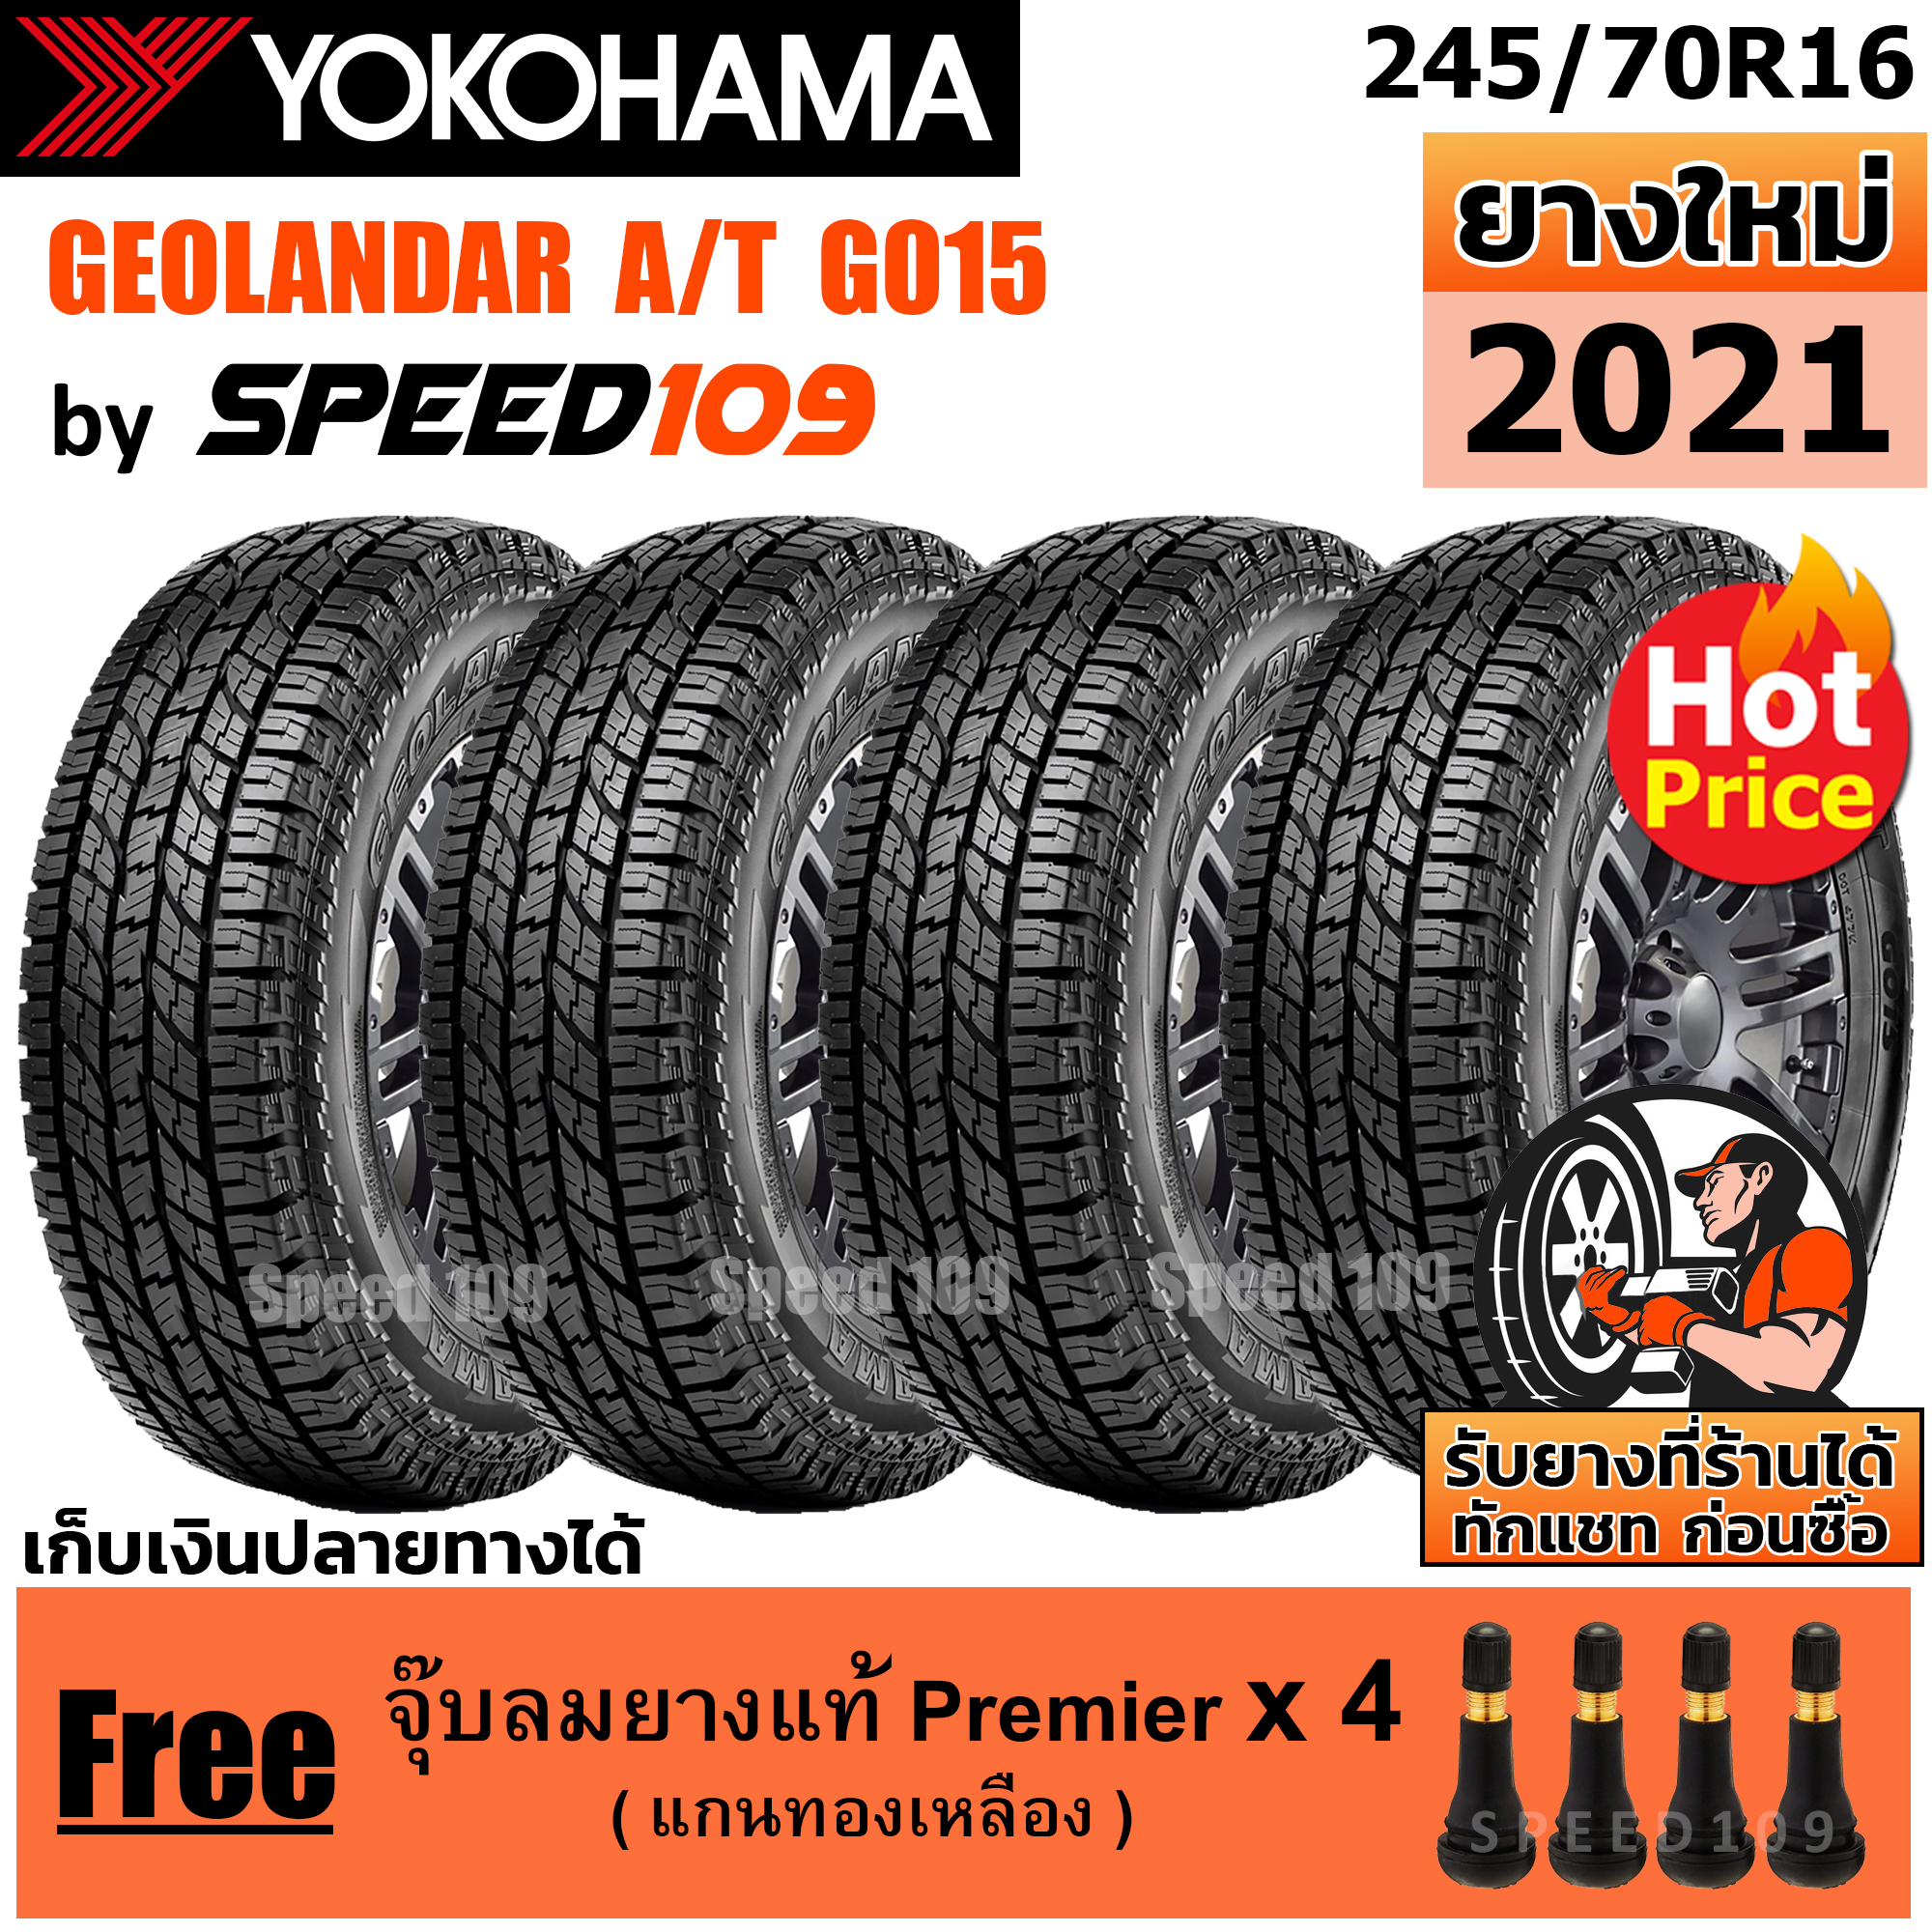 YOKOHAMA ยางรถยนต์ ขอบ 16 ขนาด 245/70R16 รุ่น GEOLANDAR A/T G015 - 4 เส้น (ปี 2021)